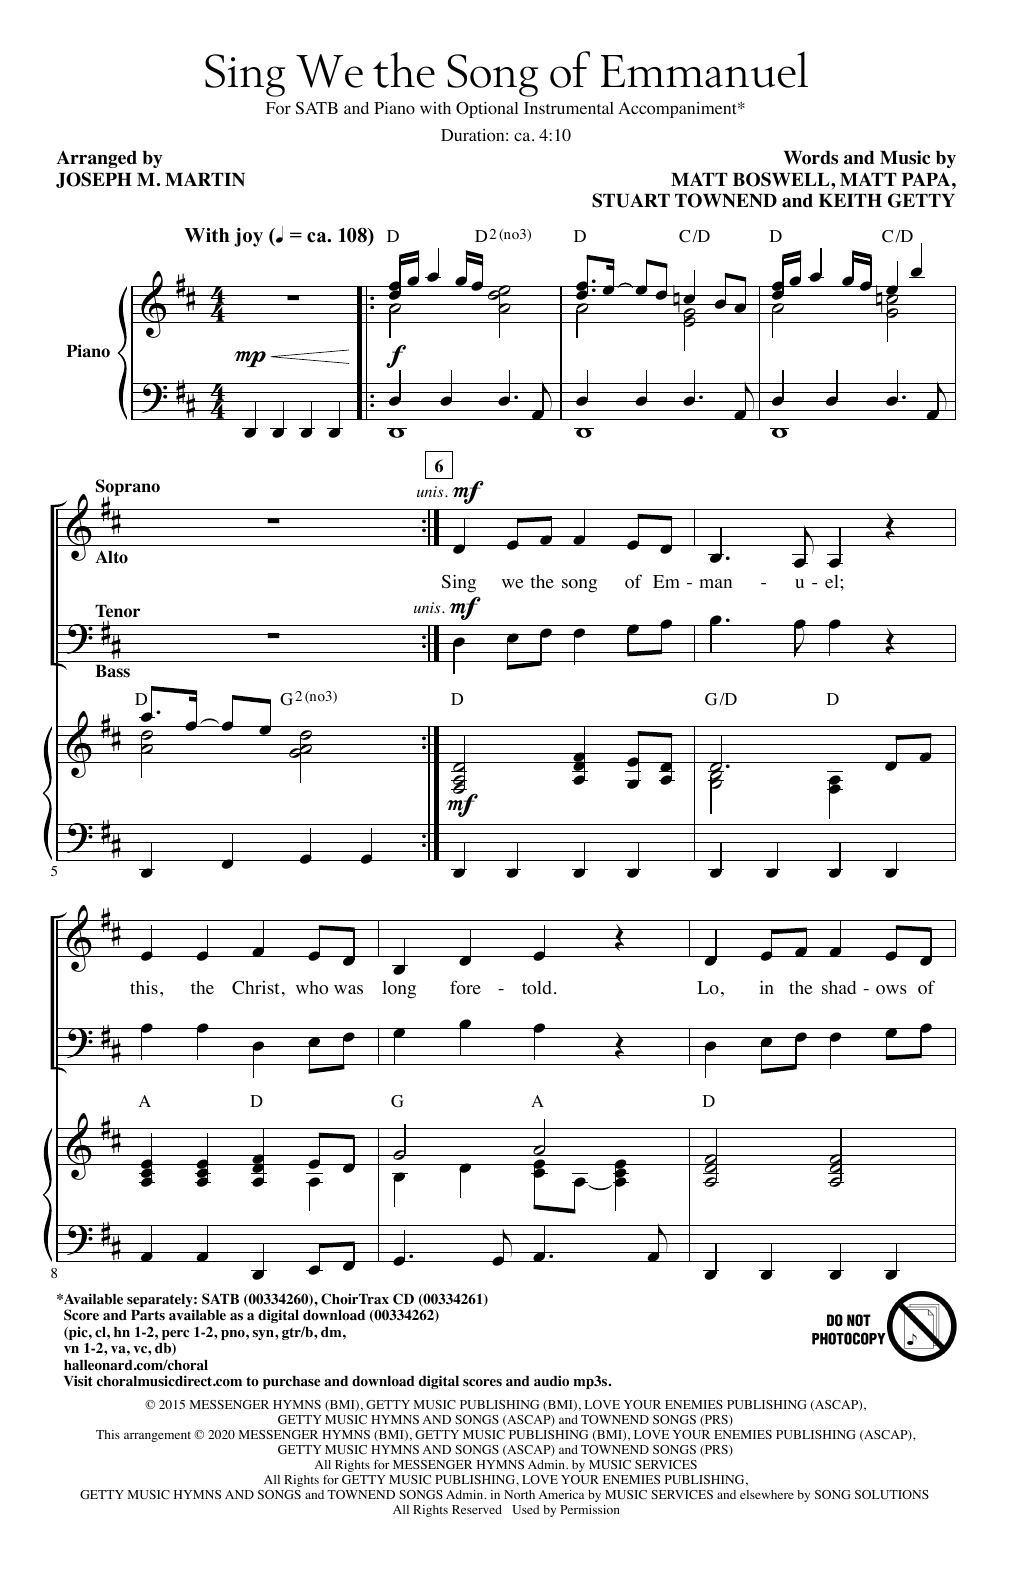 Keith & Kristyn Getty, Matt Boswell and Matt Papa Sing We The Song Of Emmanuel (arr. Joseph M. Martin) Sheet Music Notes & Chords for SATB Choir - Download or Print PDF